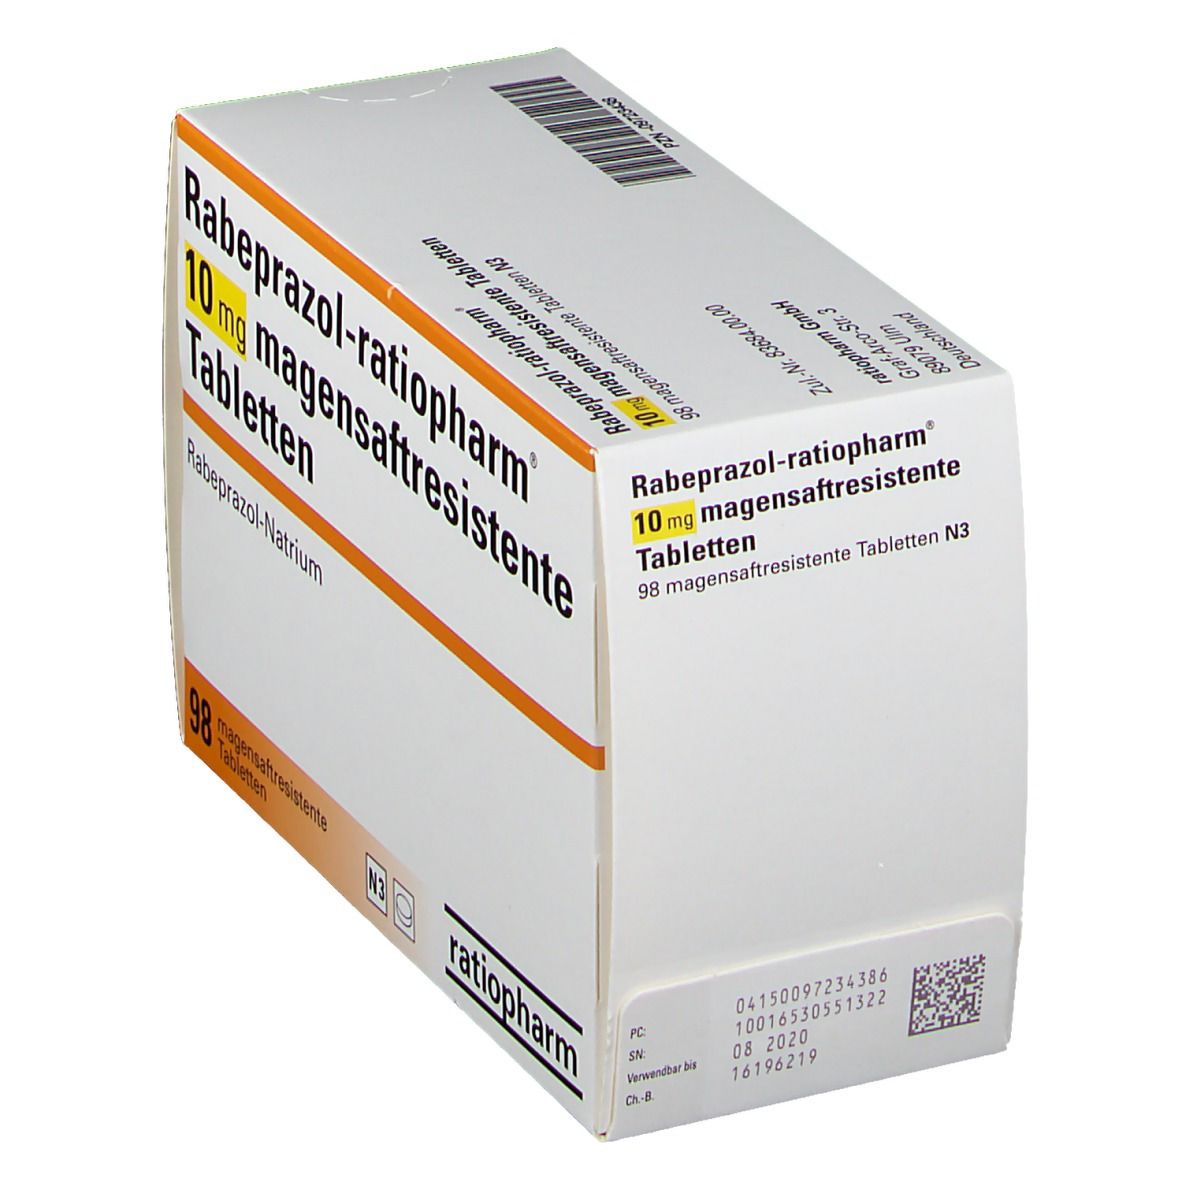 Rabeprazol-ratiopharm® 10 mg